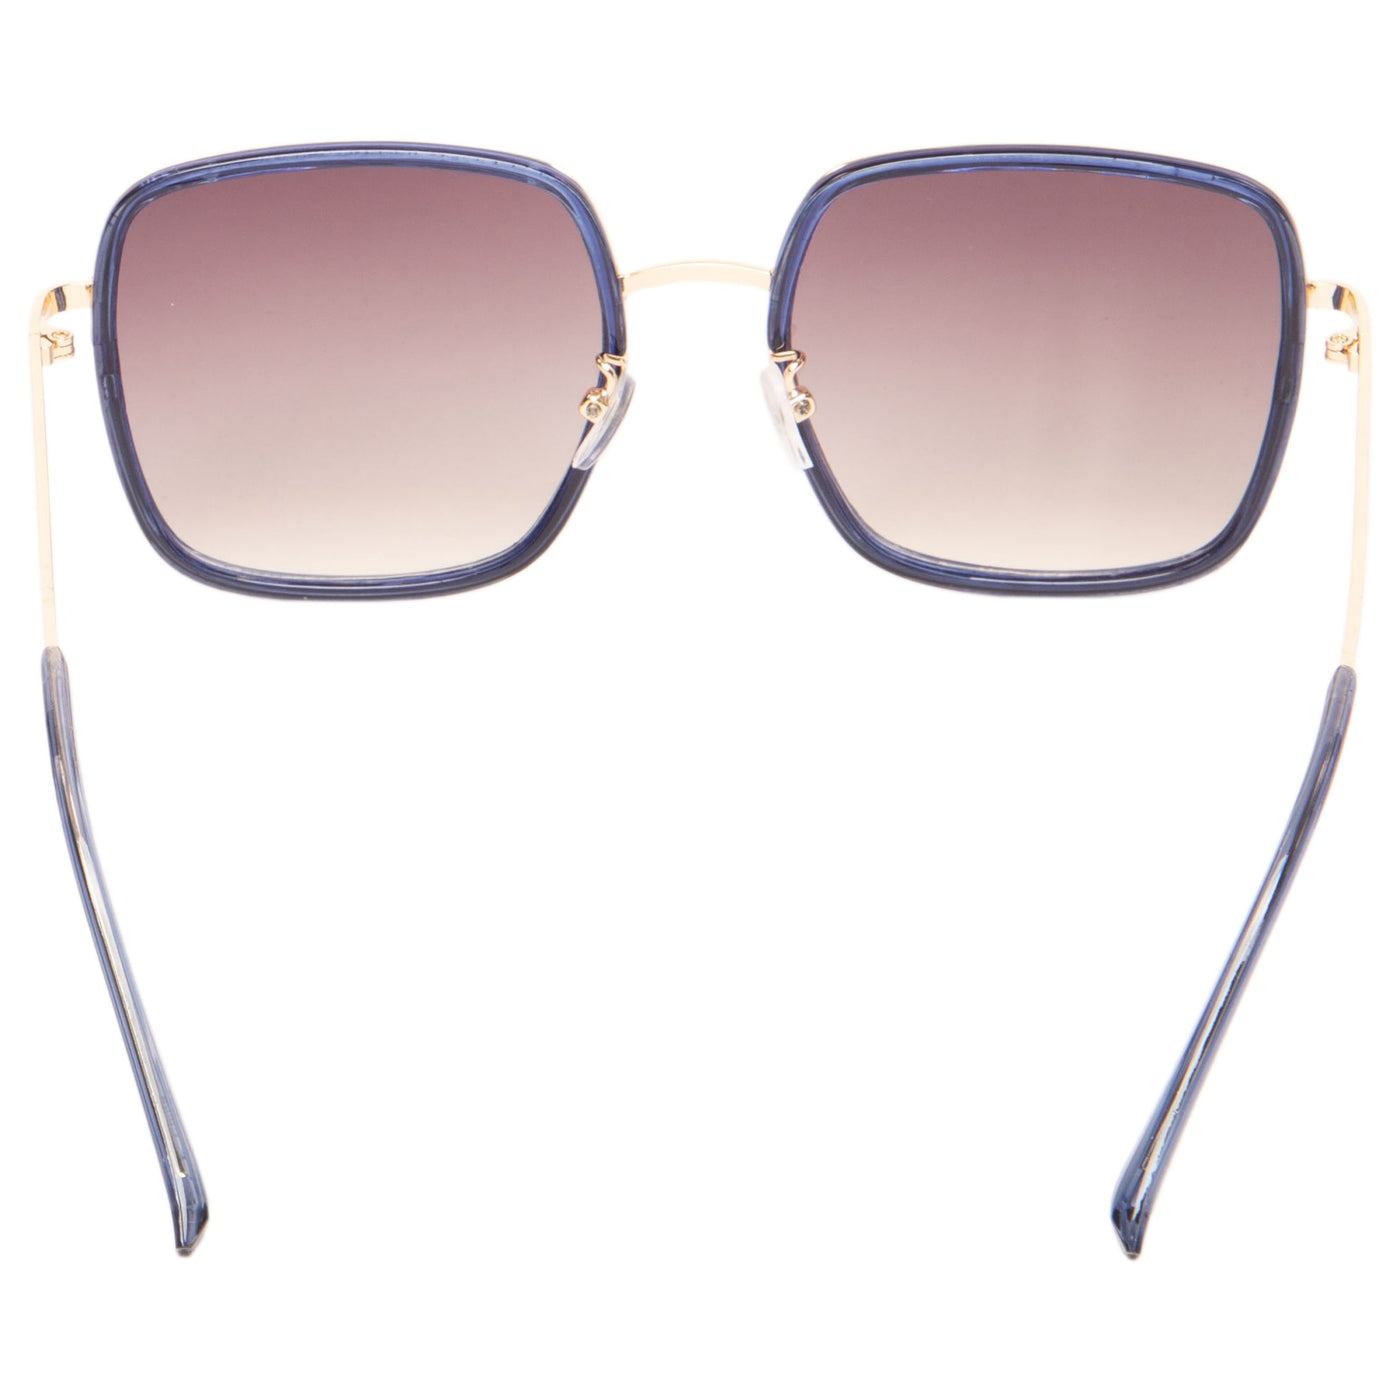 GLASSES - Womens Metal Square Frame Sunglasses